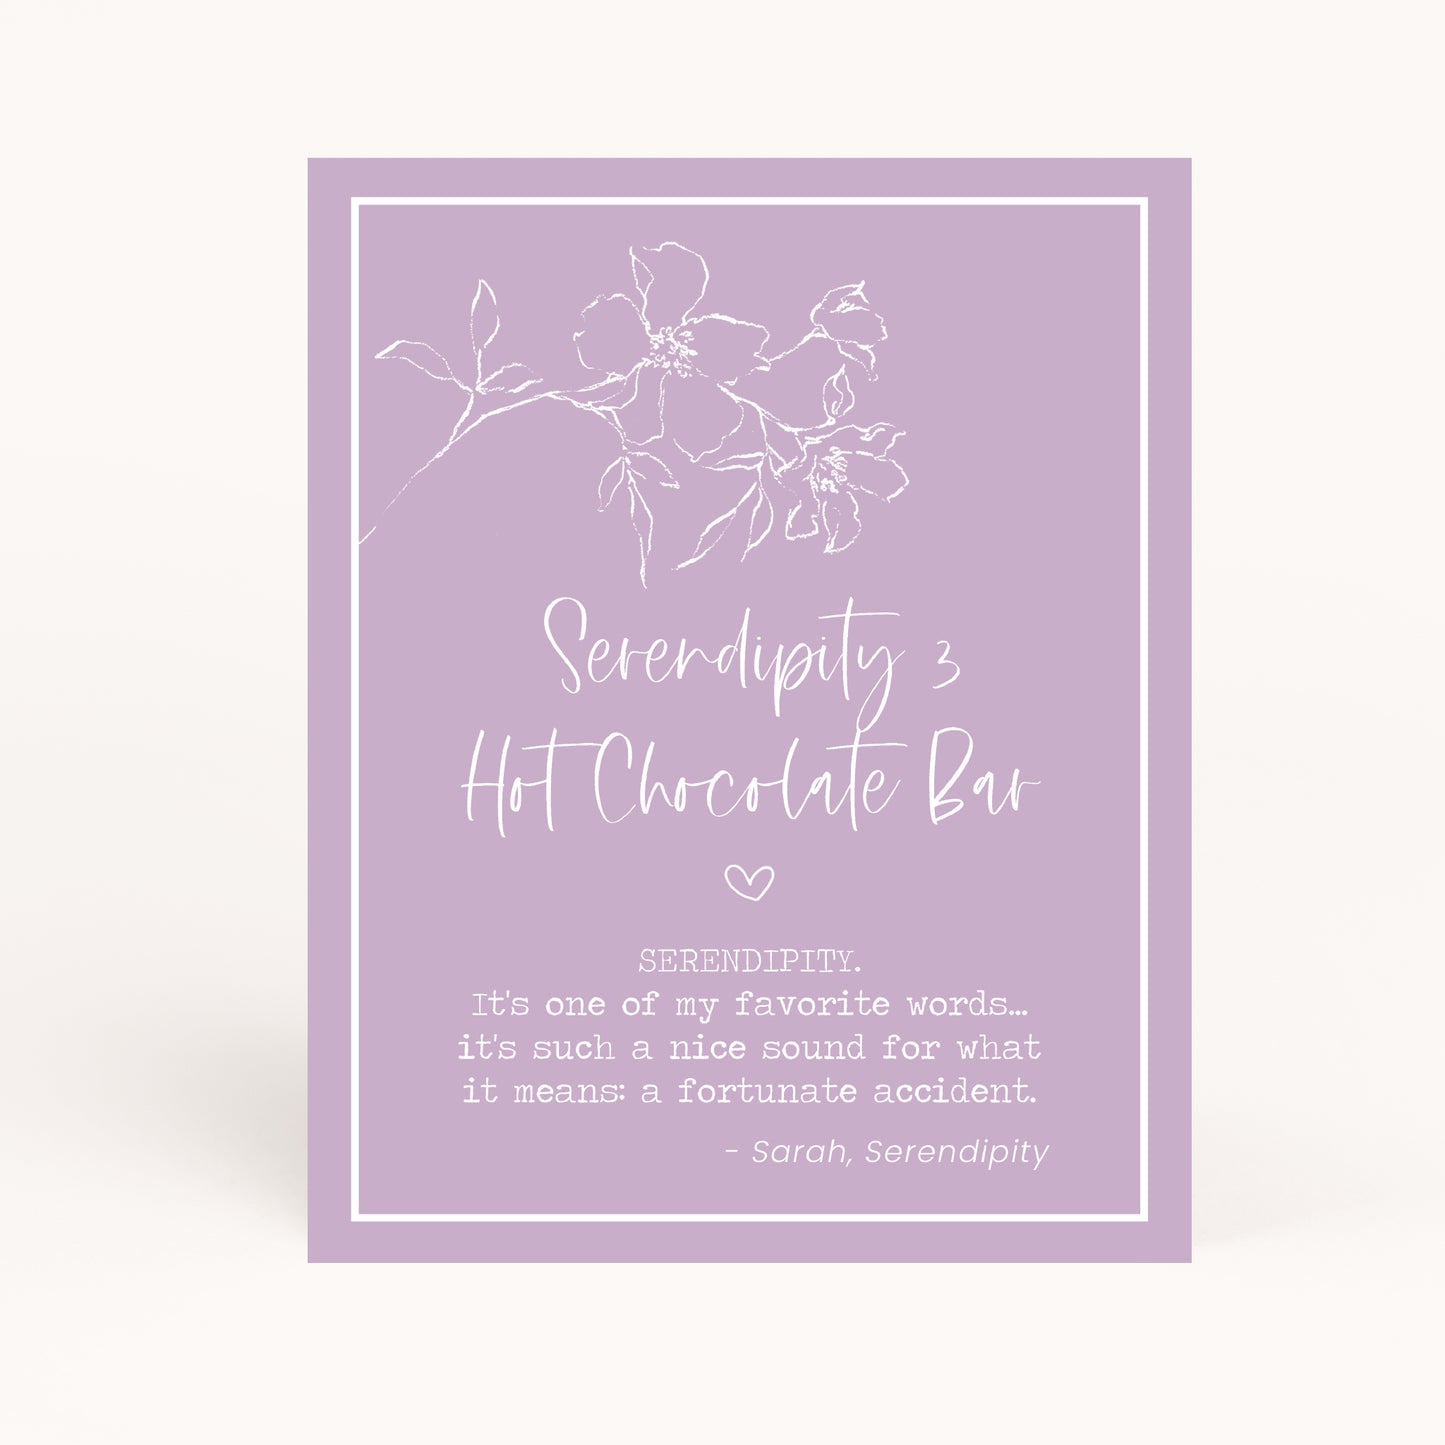 Romantic Movies Bridal Shower Serendipity Hot Chocolate Bar Sign Printable